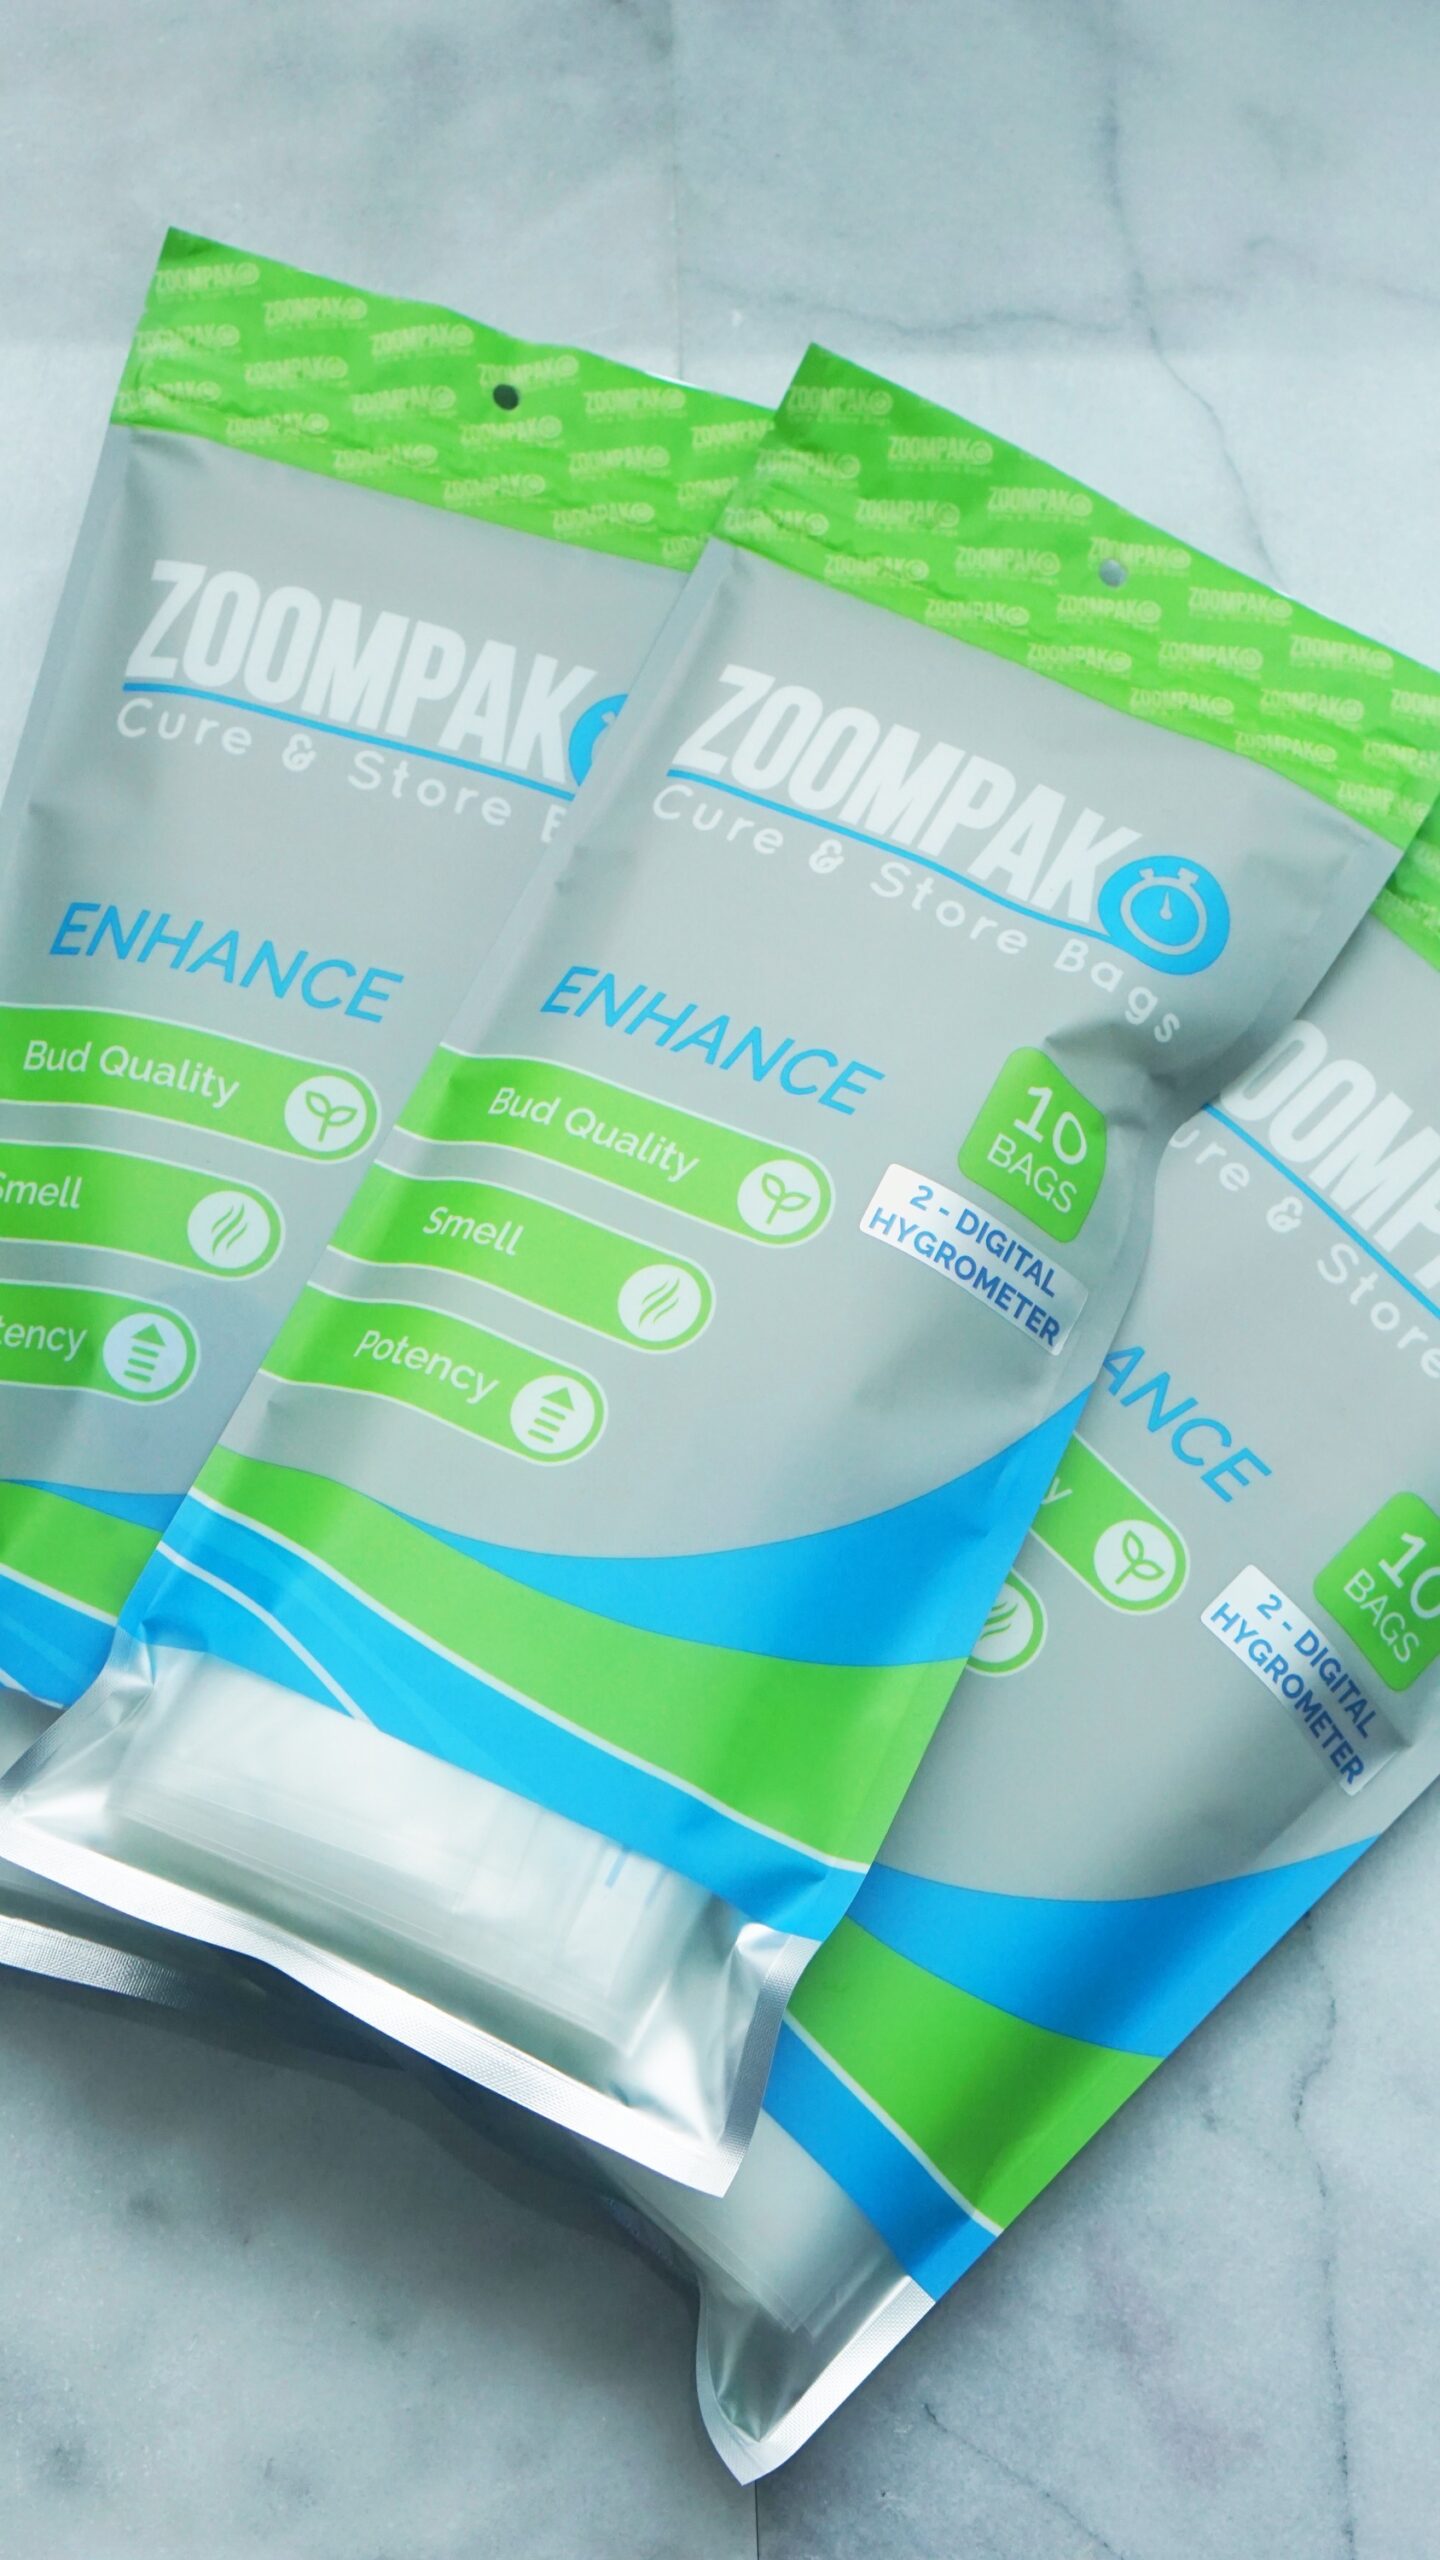 Zoompak cure bags 3